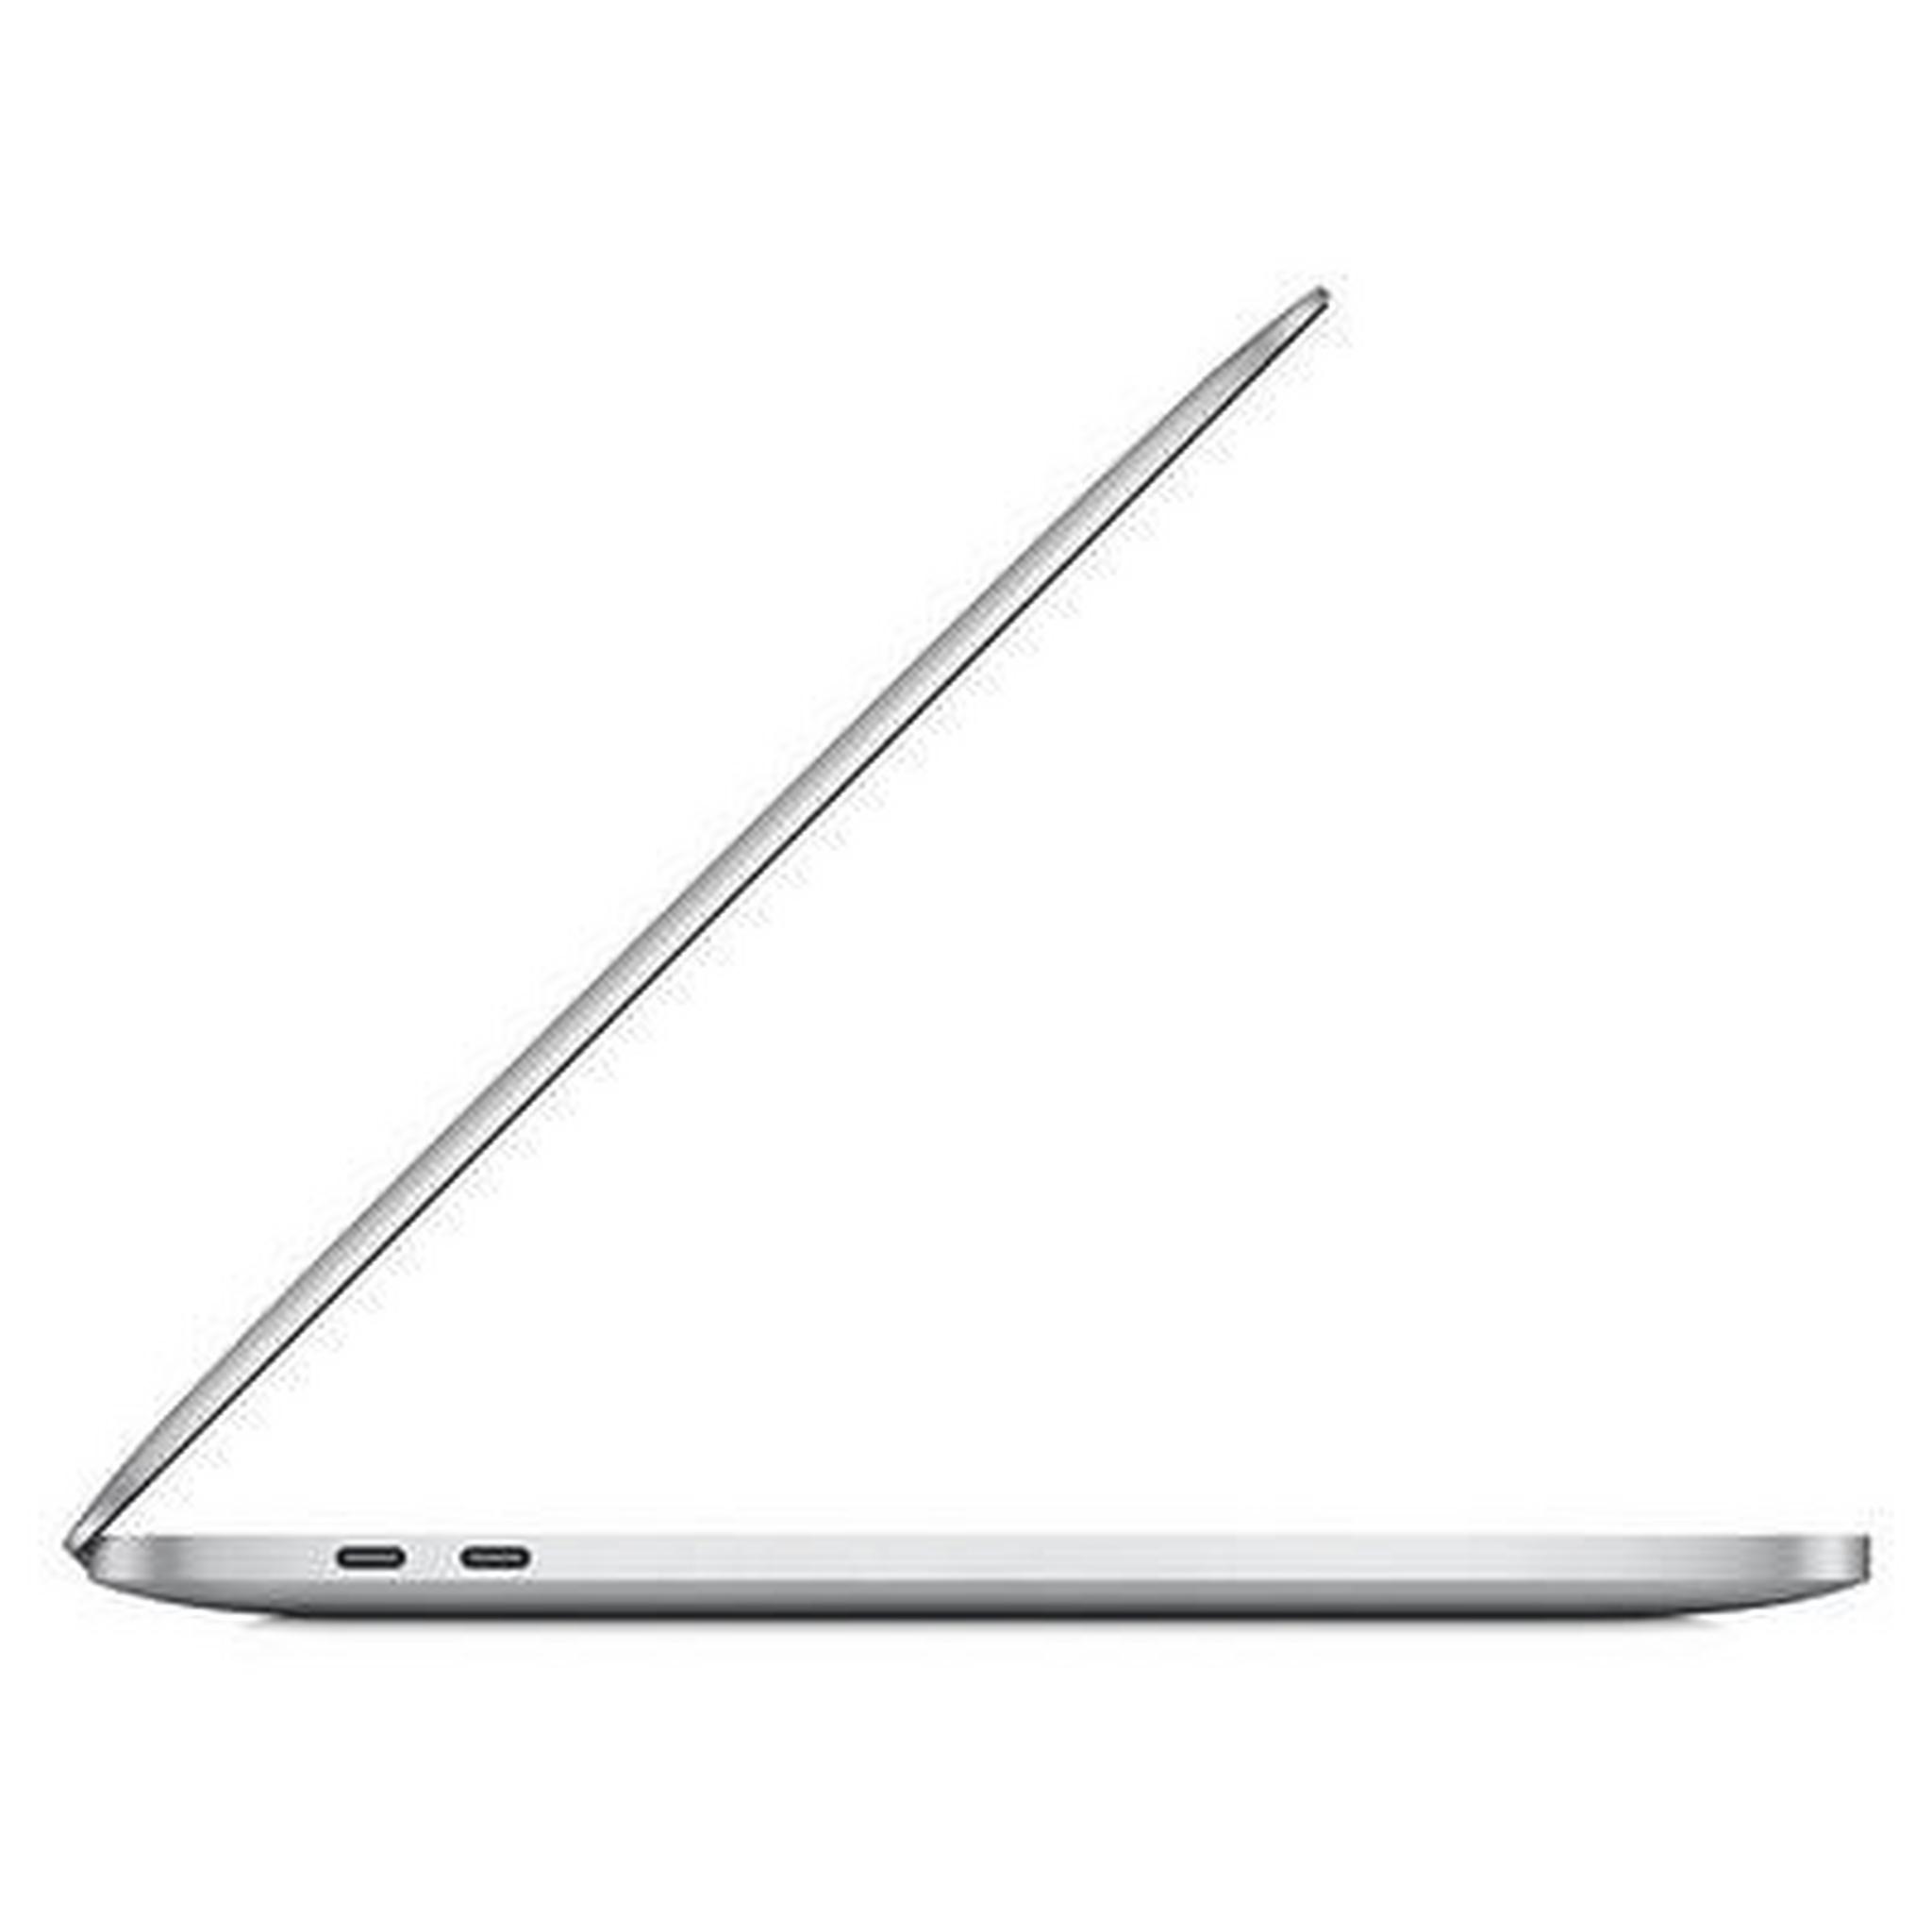 Apple Macbook Pro M1, RAM 8GB, 256GB SSD 13.3-inch (2020) - Silver